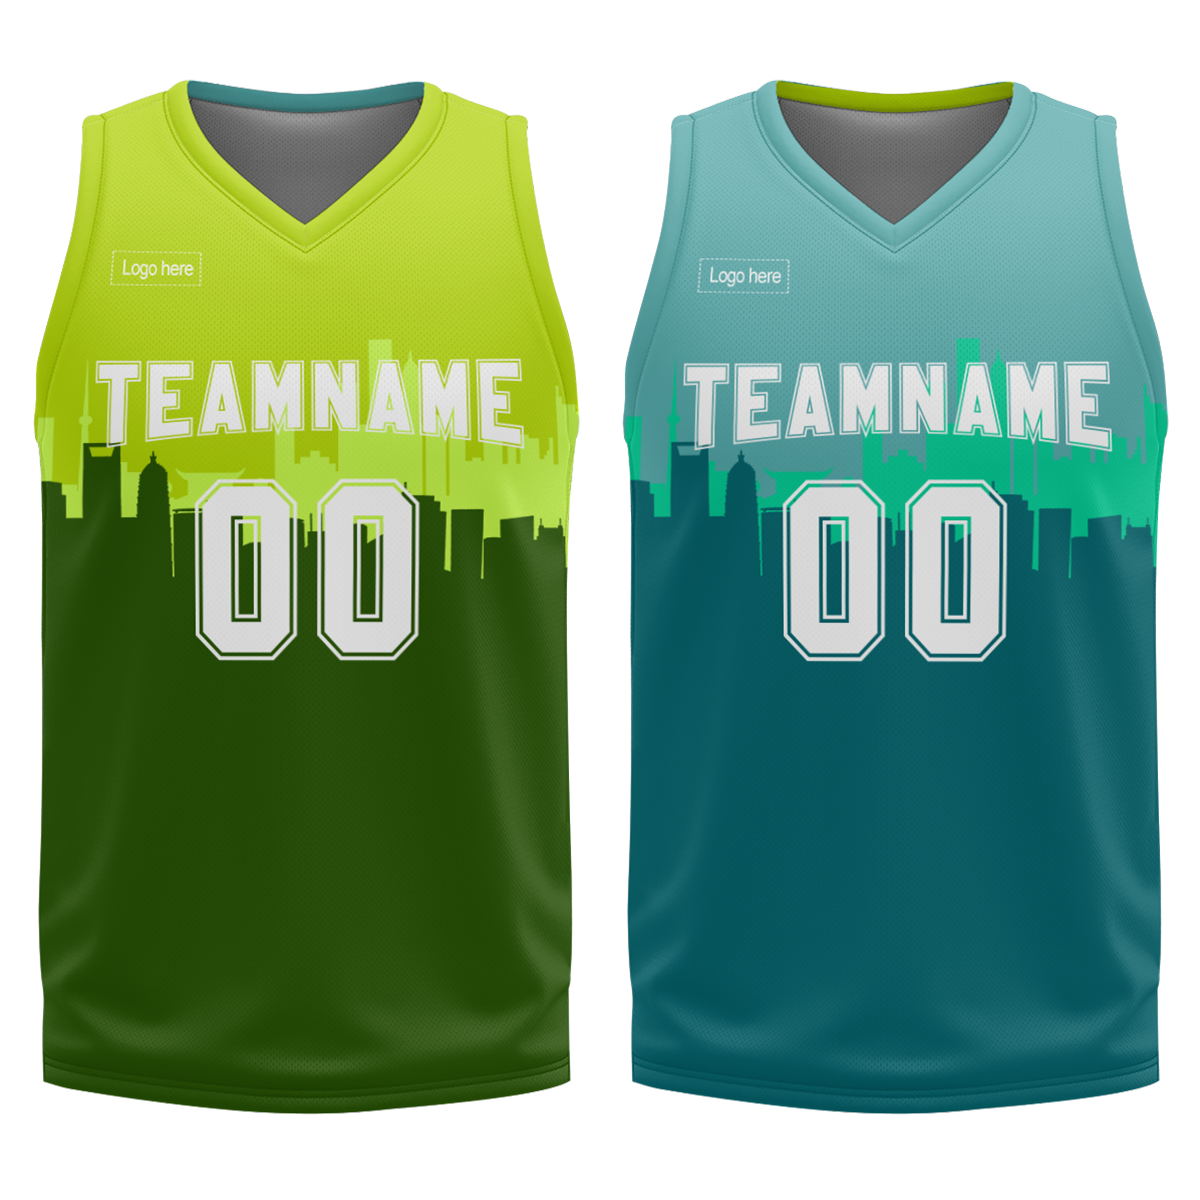 custom-printed-men-latest-basketball-jersey-design-sports-jersey-sublimation-comfortable-custom-basketball-wear-uniform-at-cj-pod-4